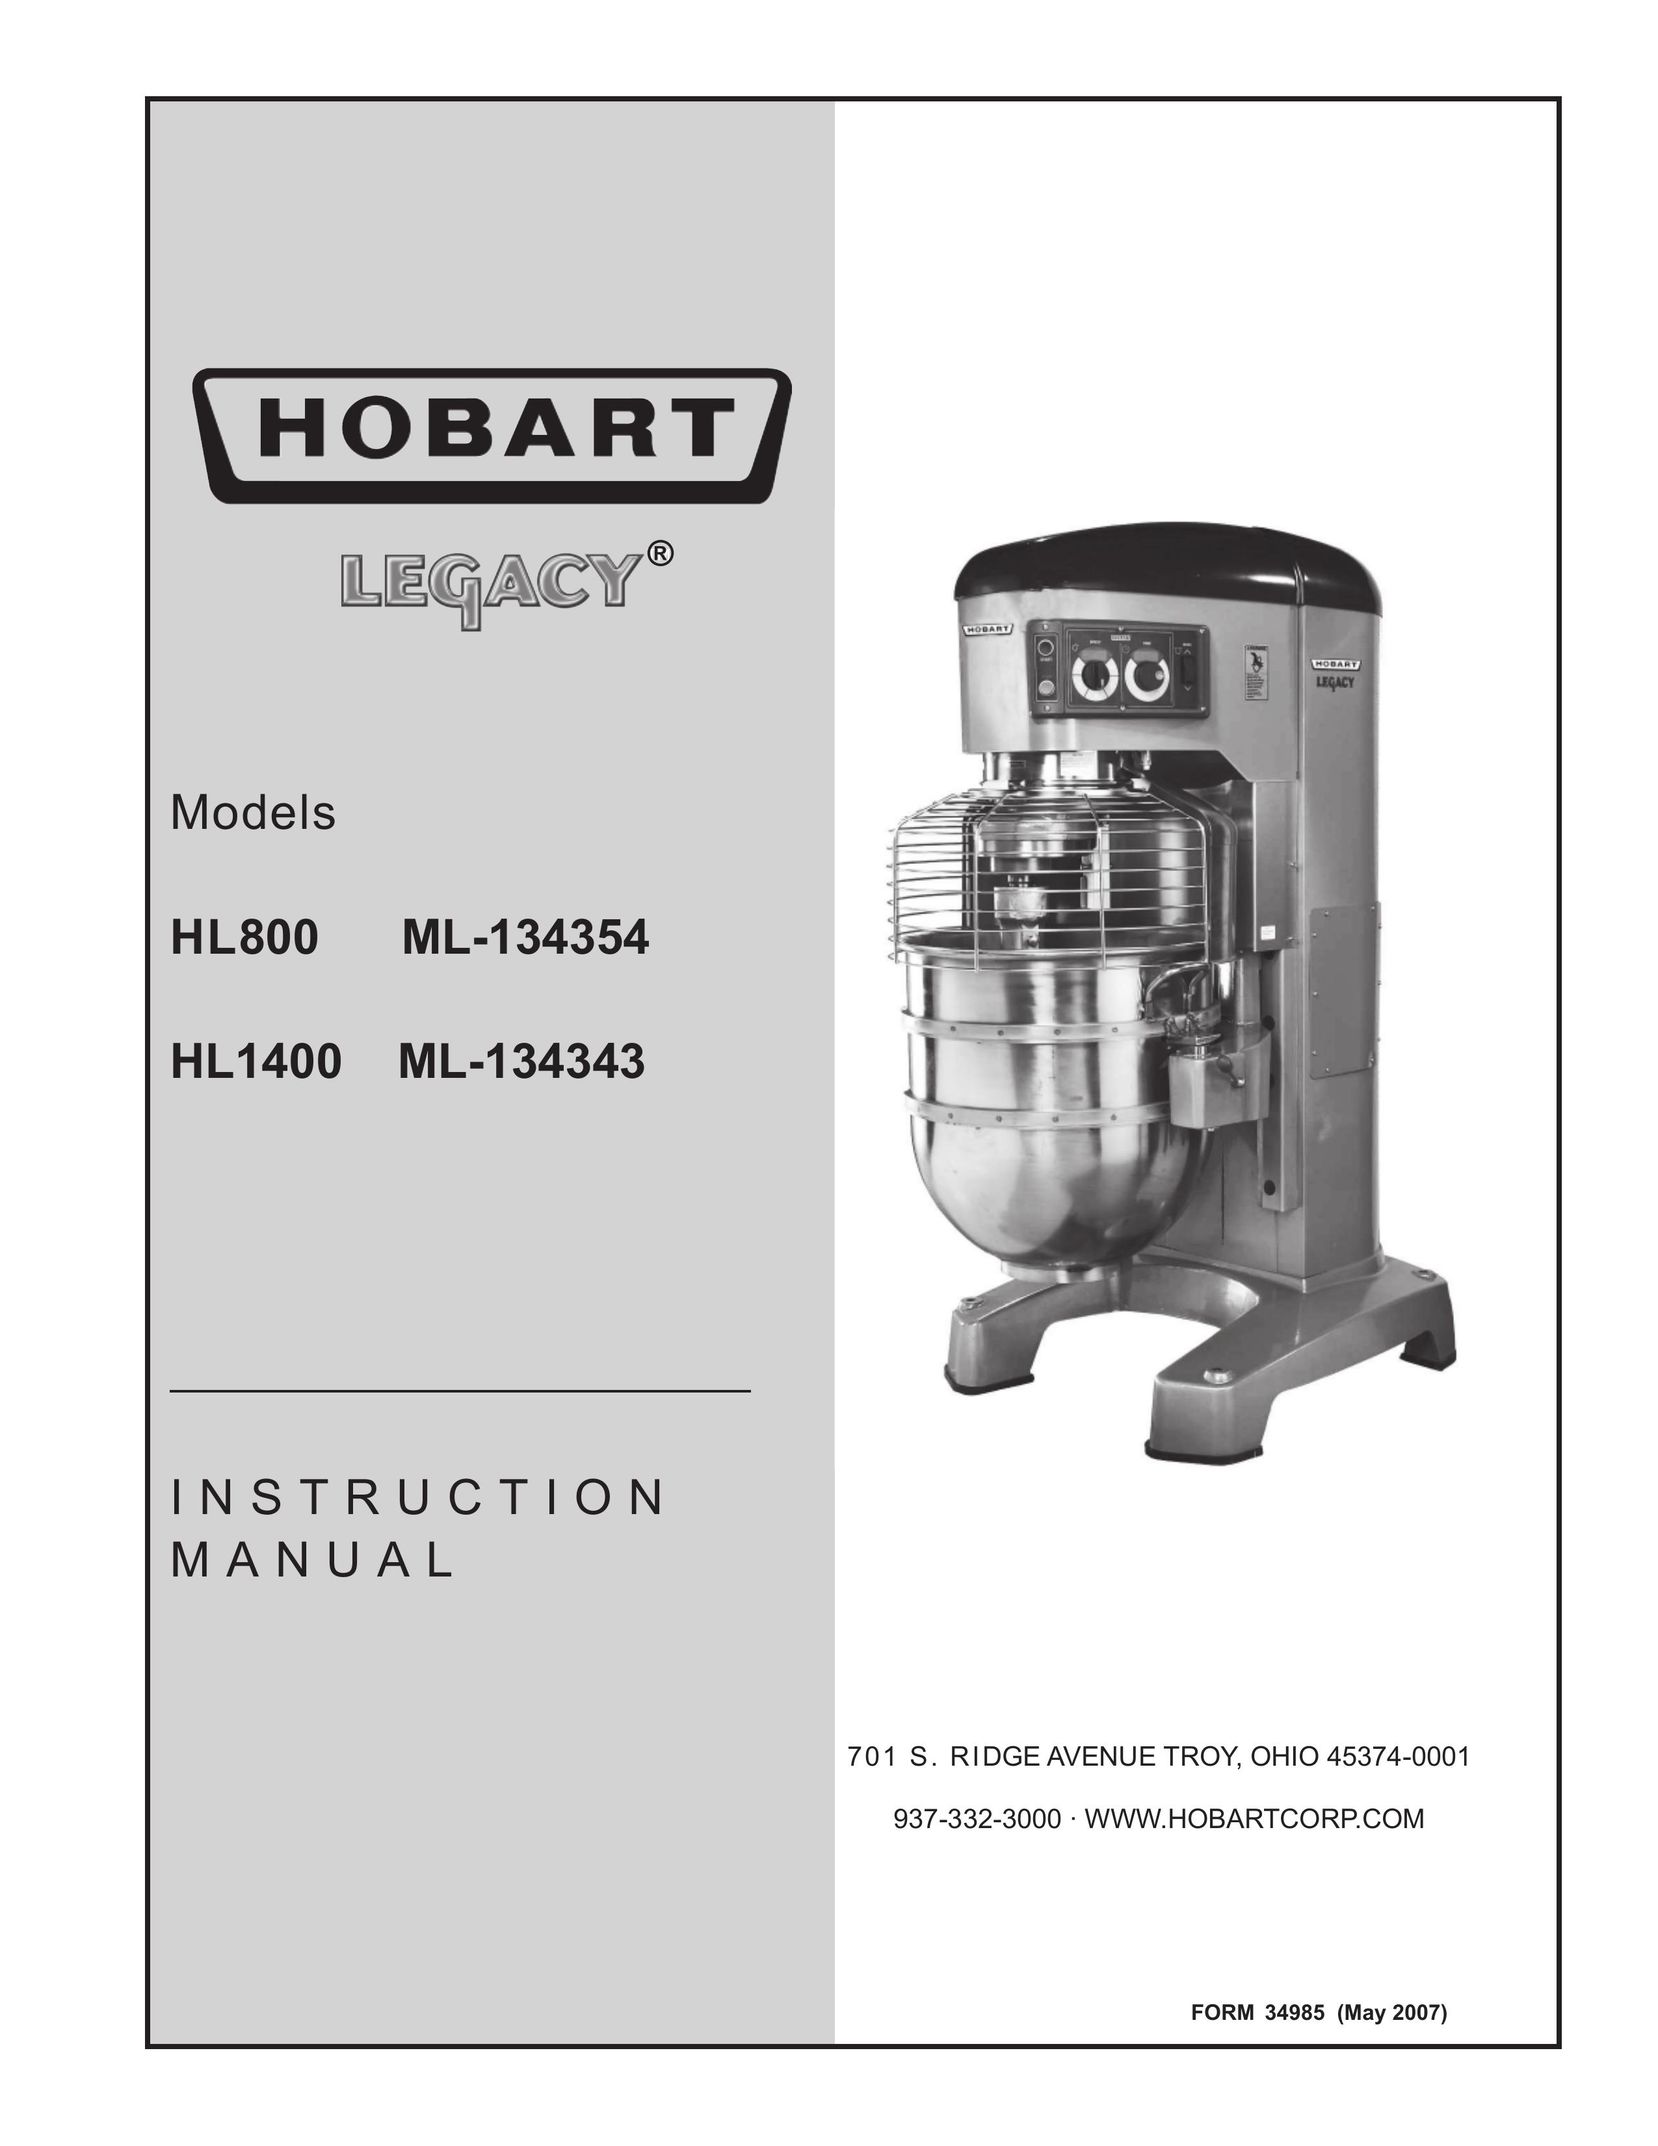 Hobart ML-134343 Mixer User Manual